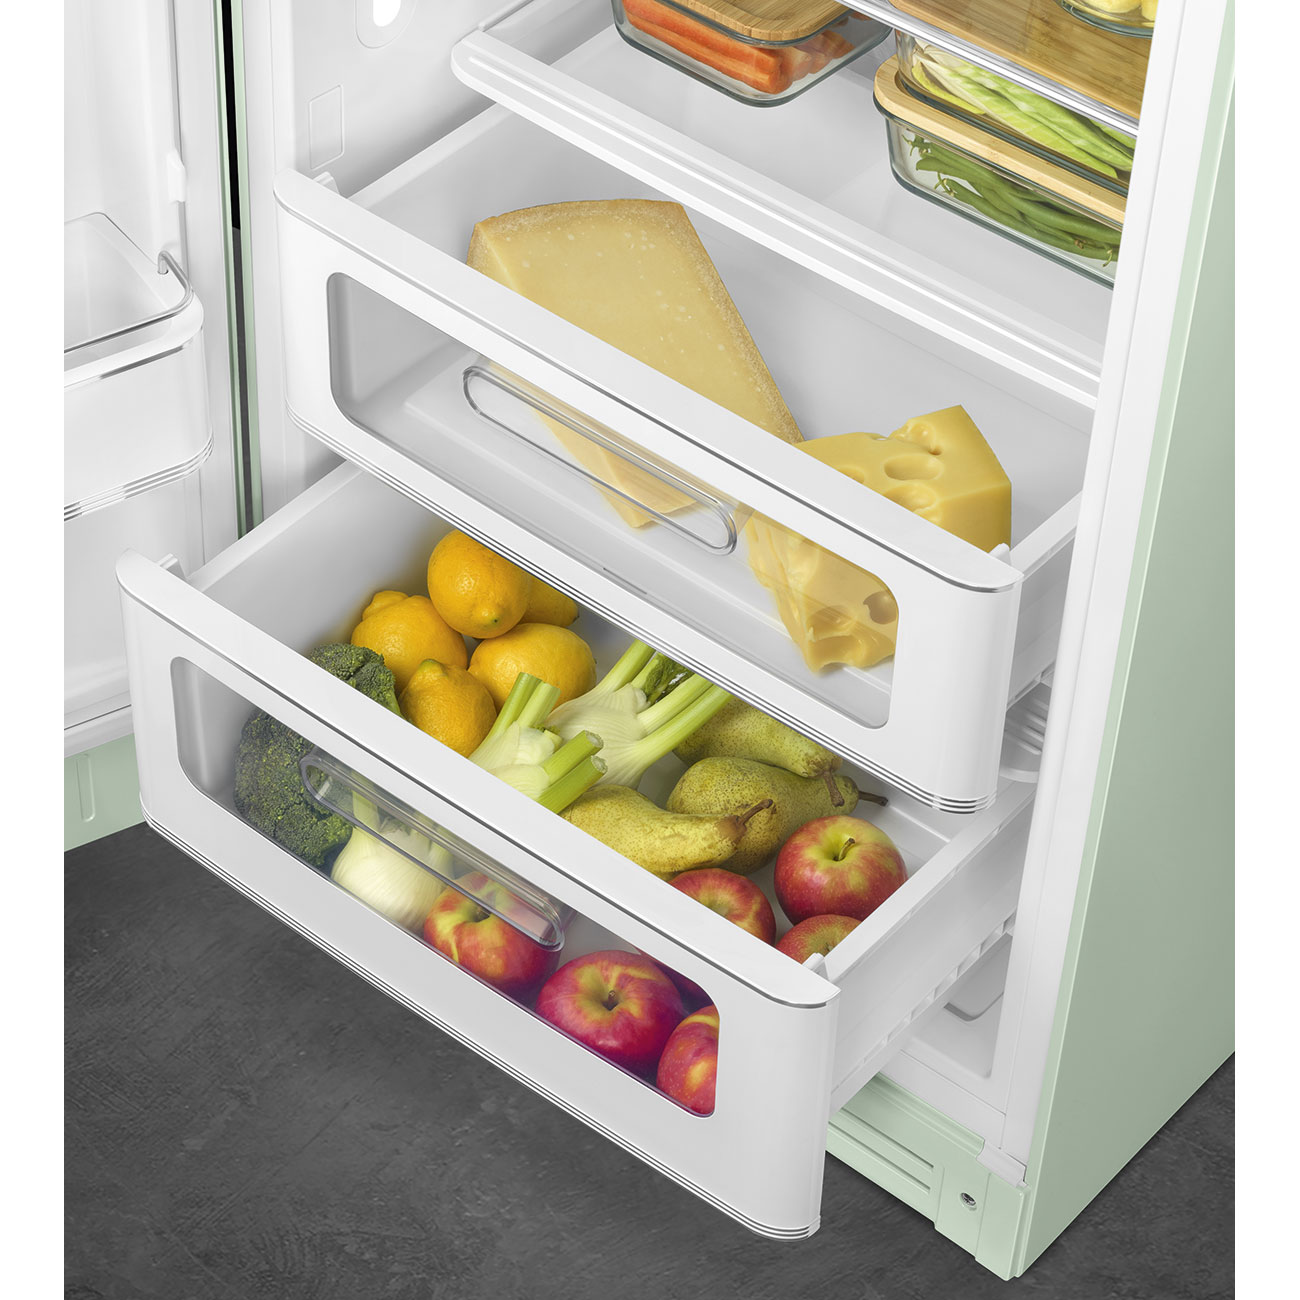 Pastel green refrigerator - Smeg_8